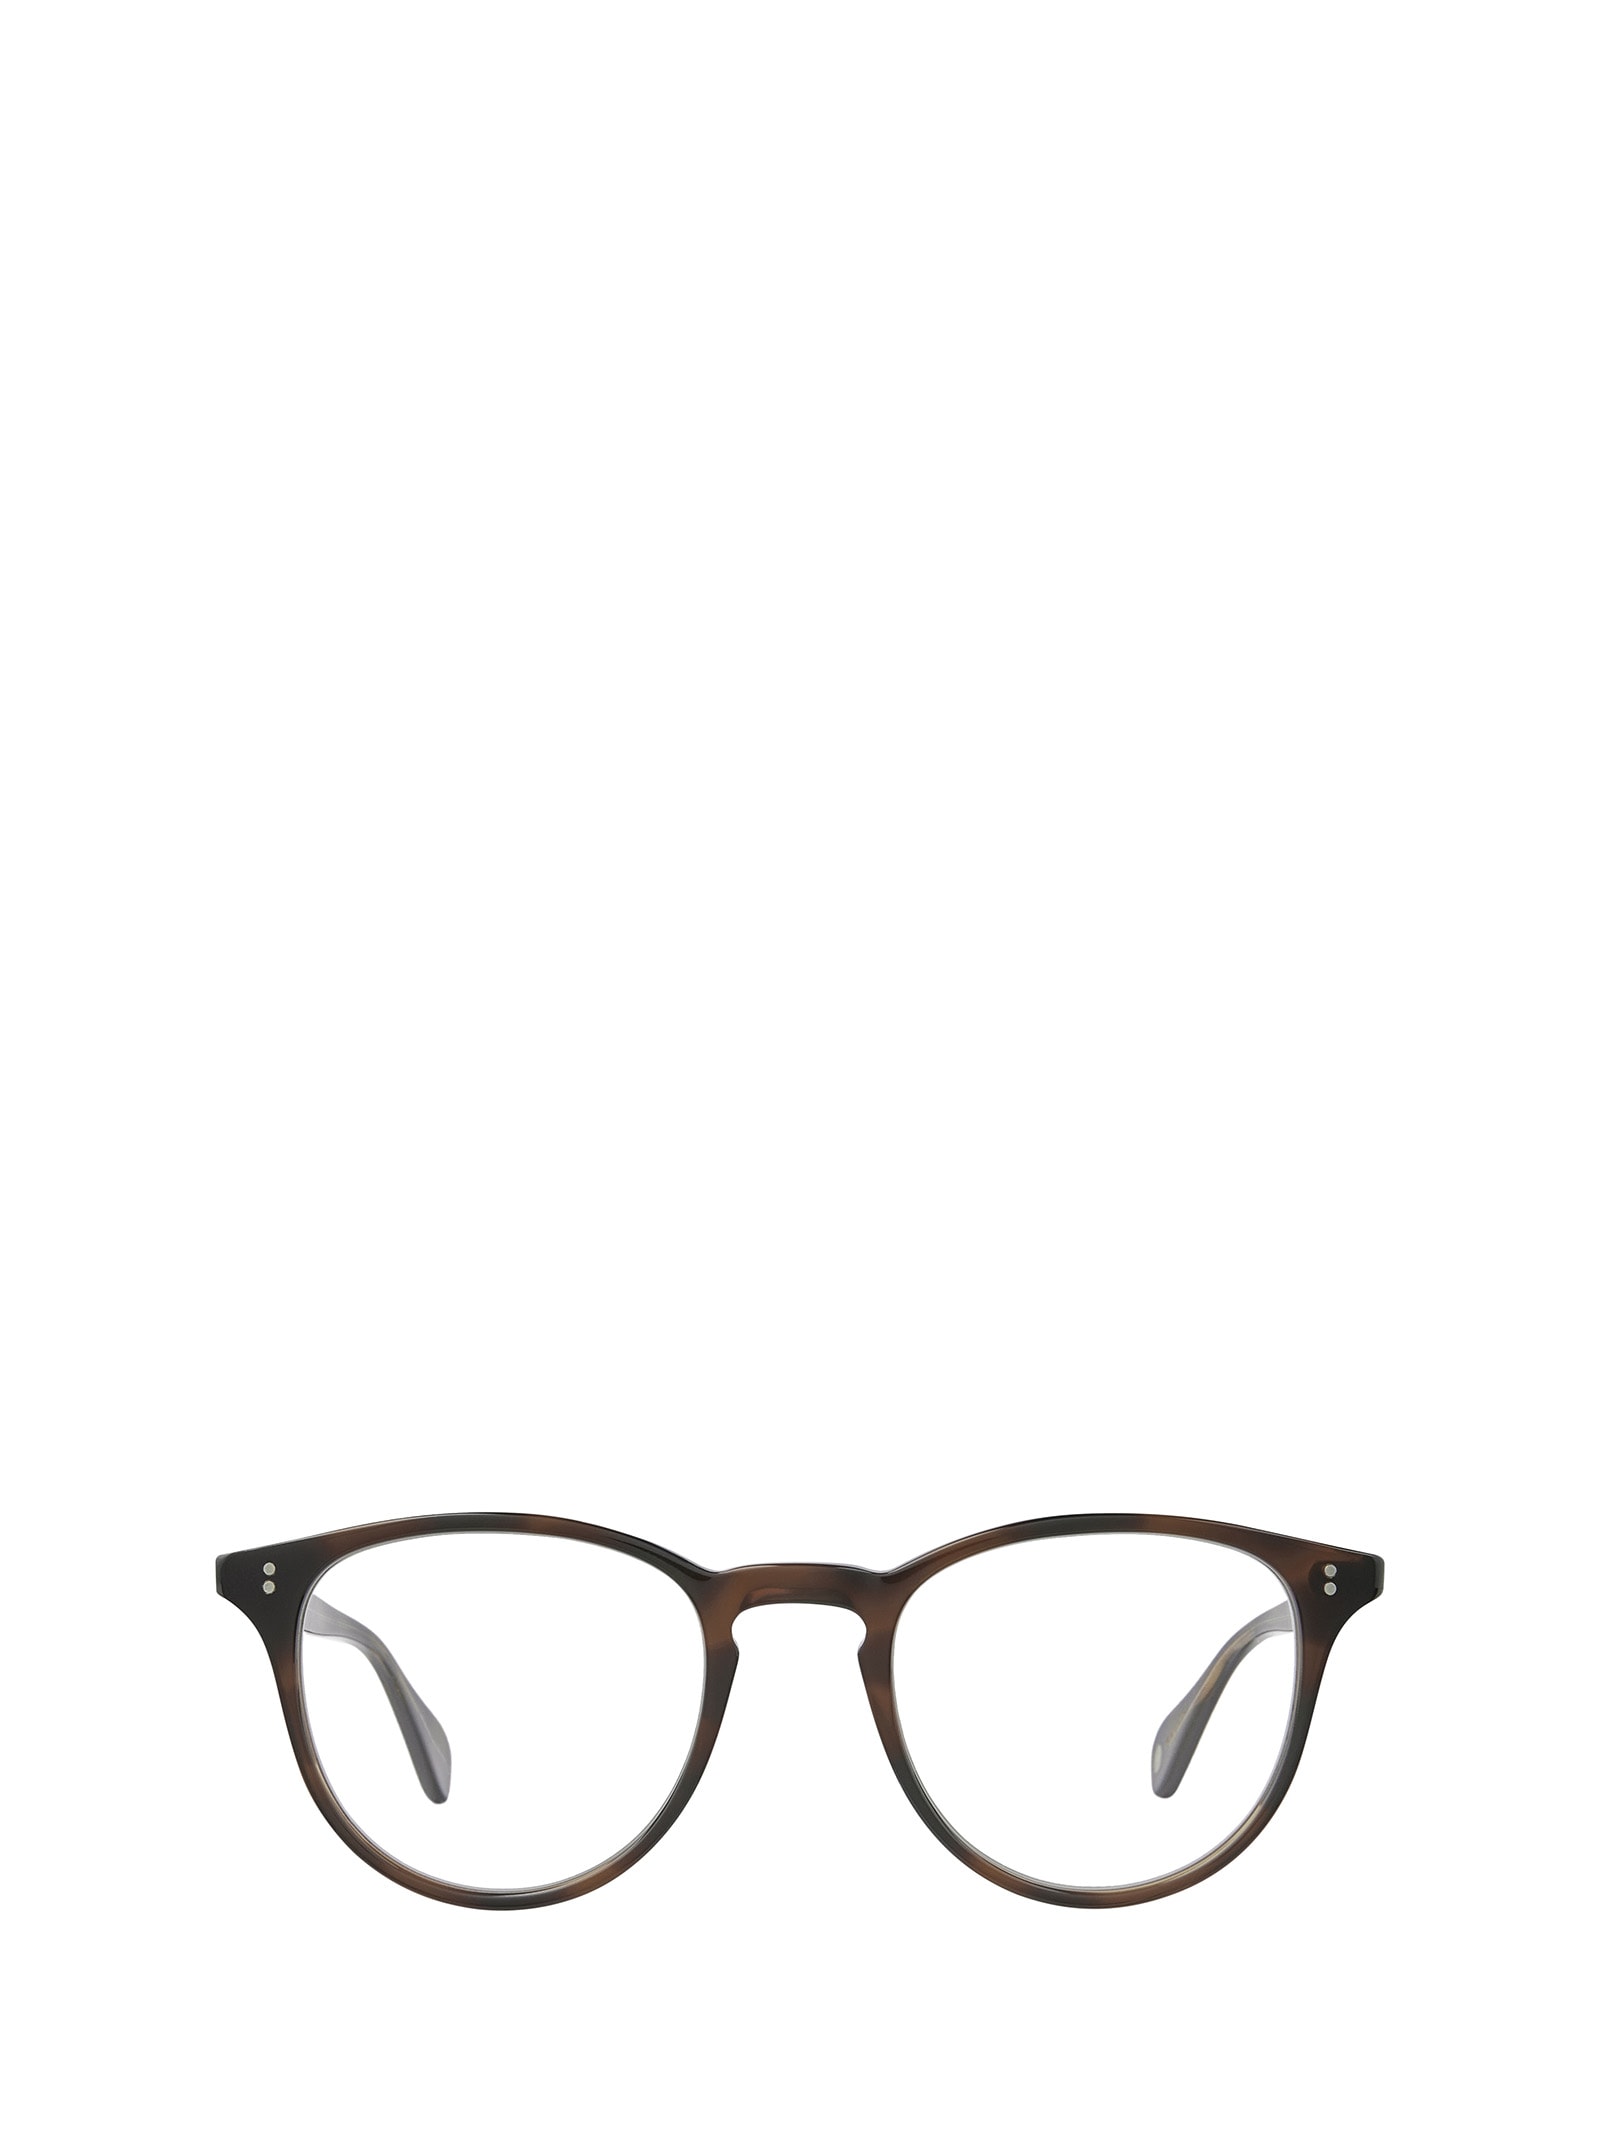 Manzanita Spotted Brown Shell Glasses